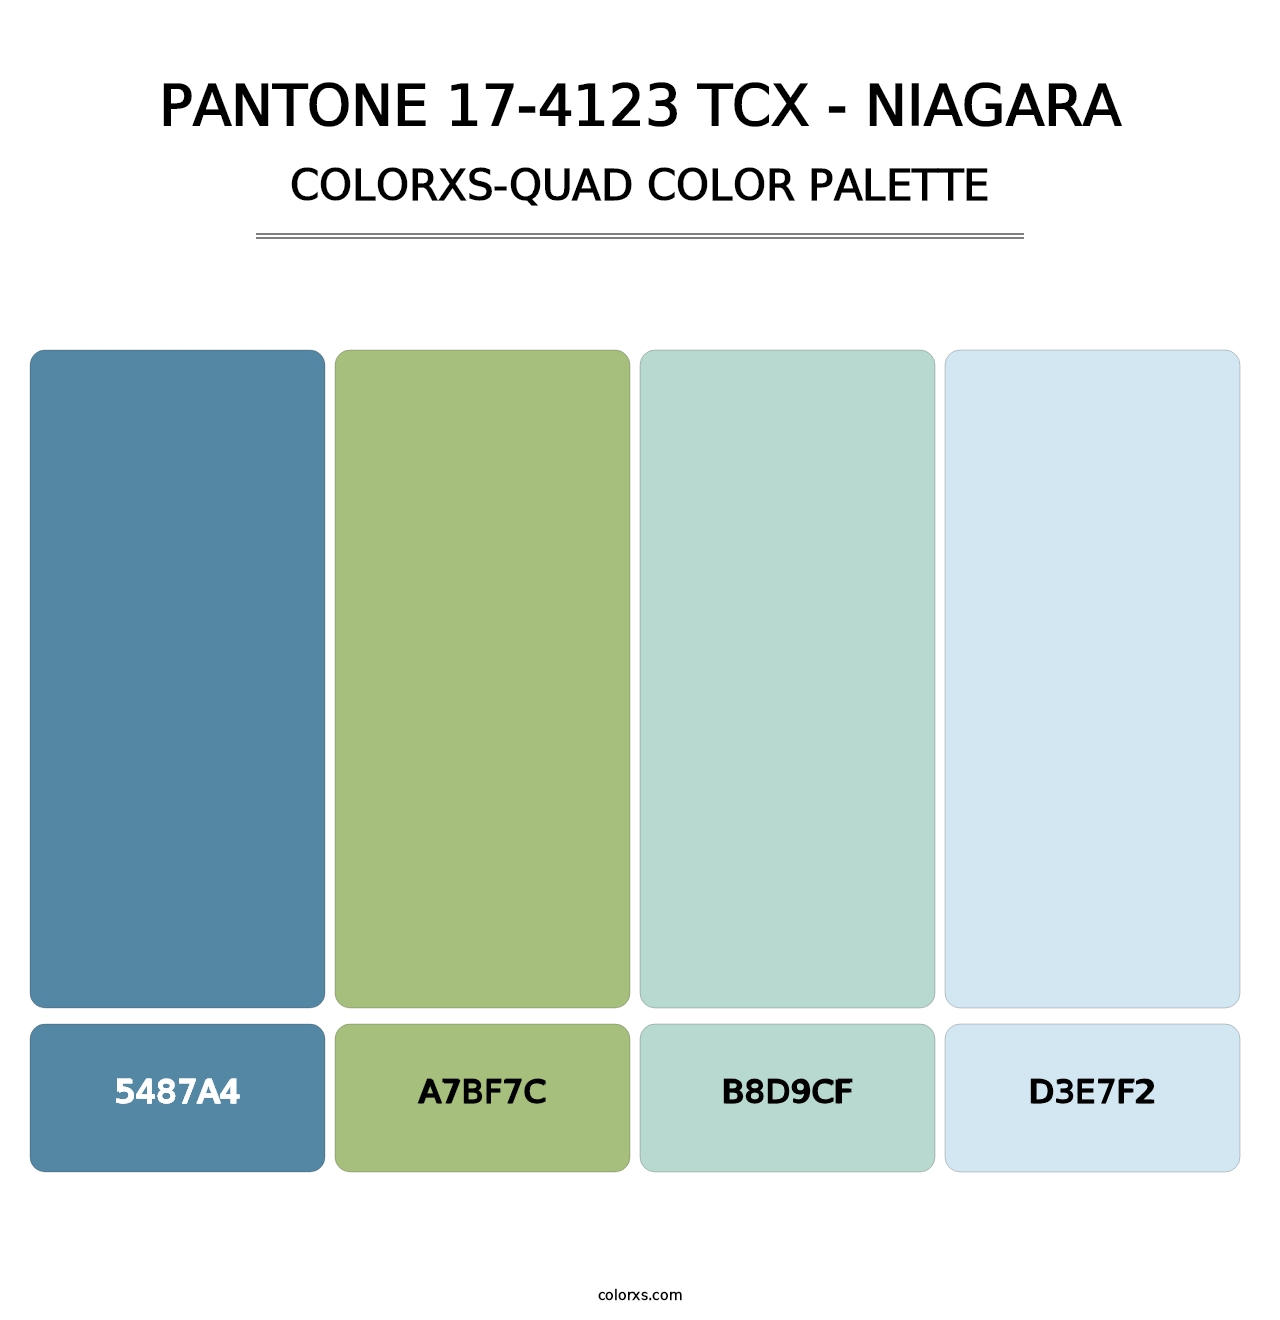 PANTONE 17-4123 TCX - Niagara - Colorxs Quad Palette